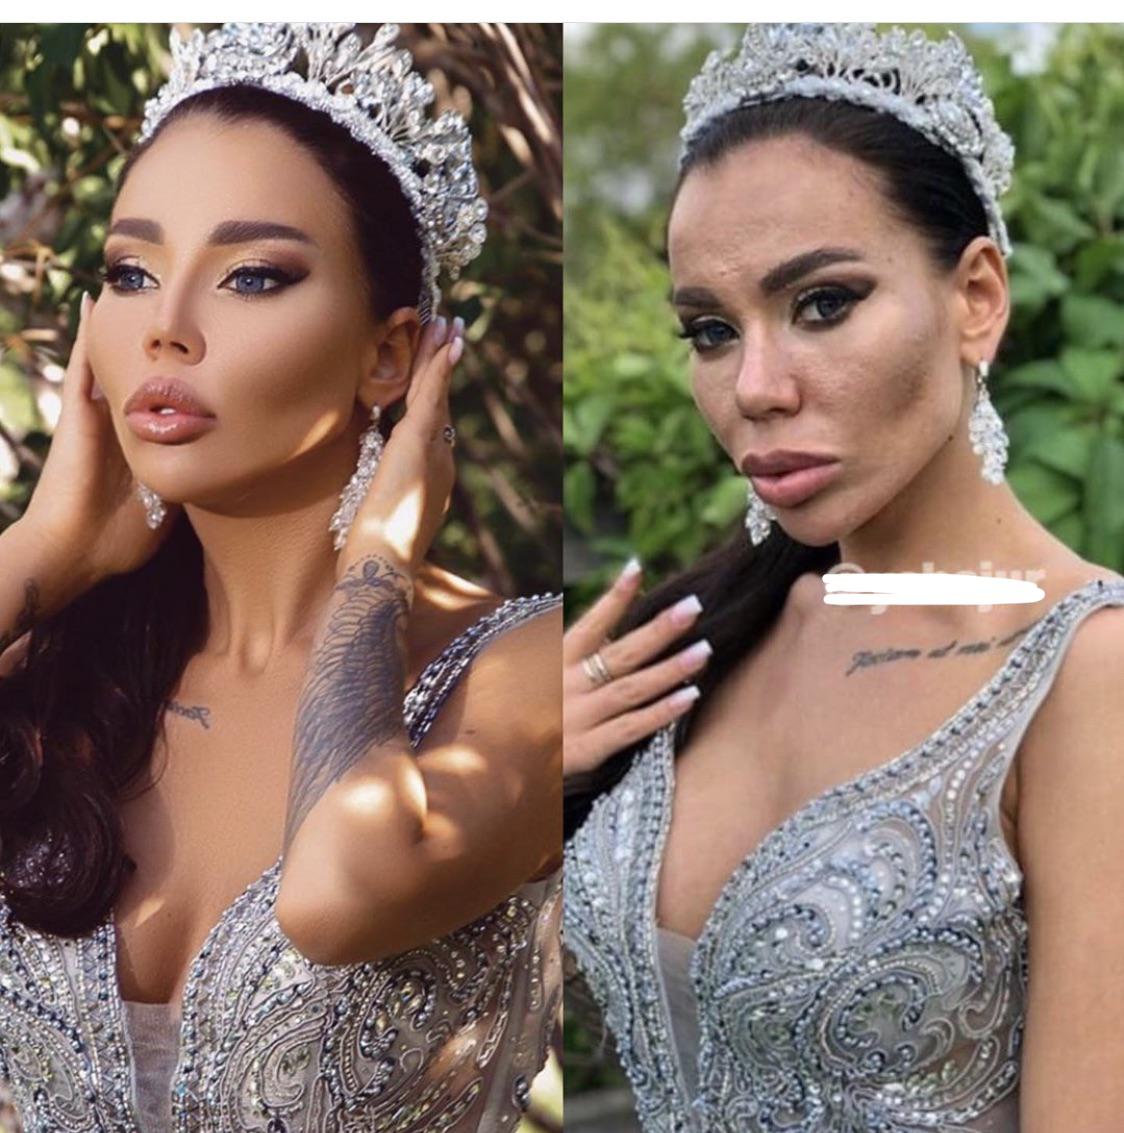 fake girls of Instagram - Make up transformation